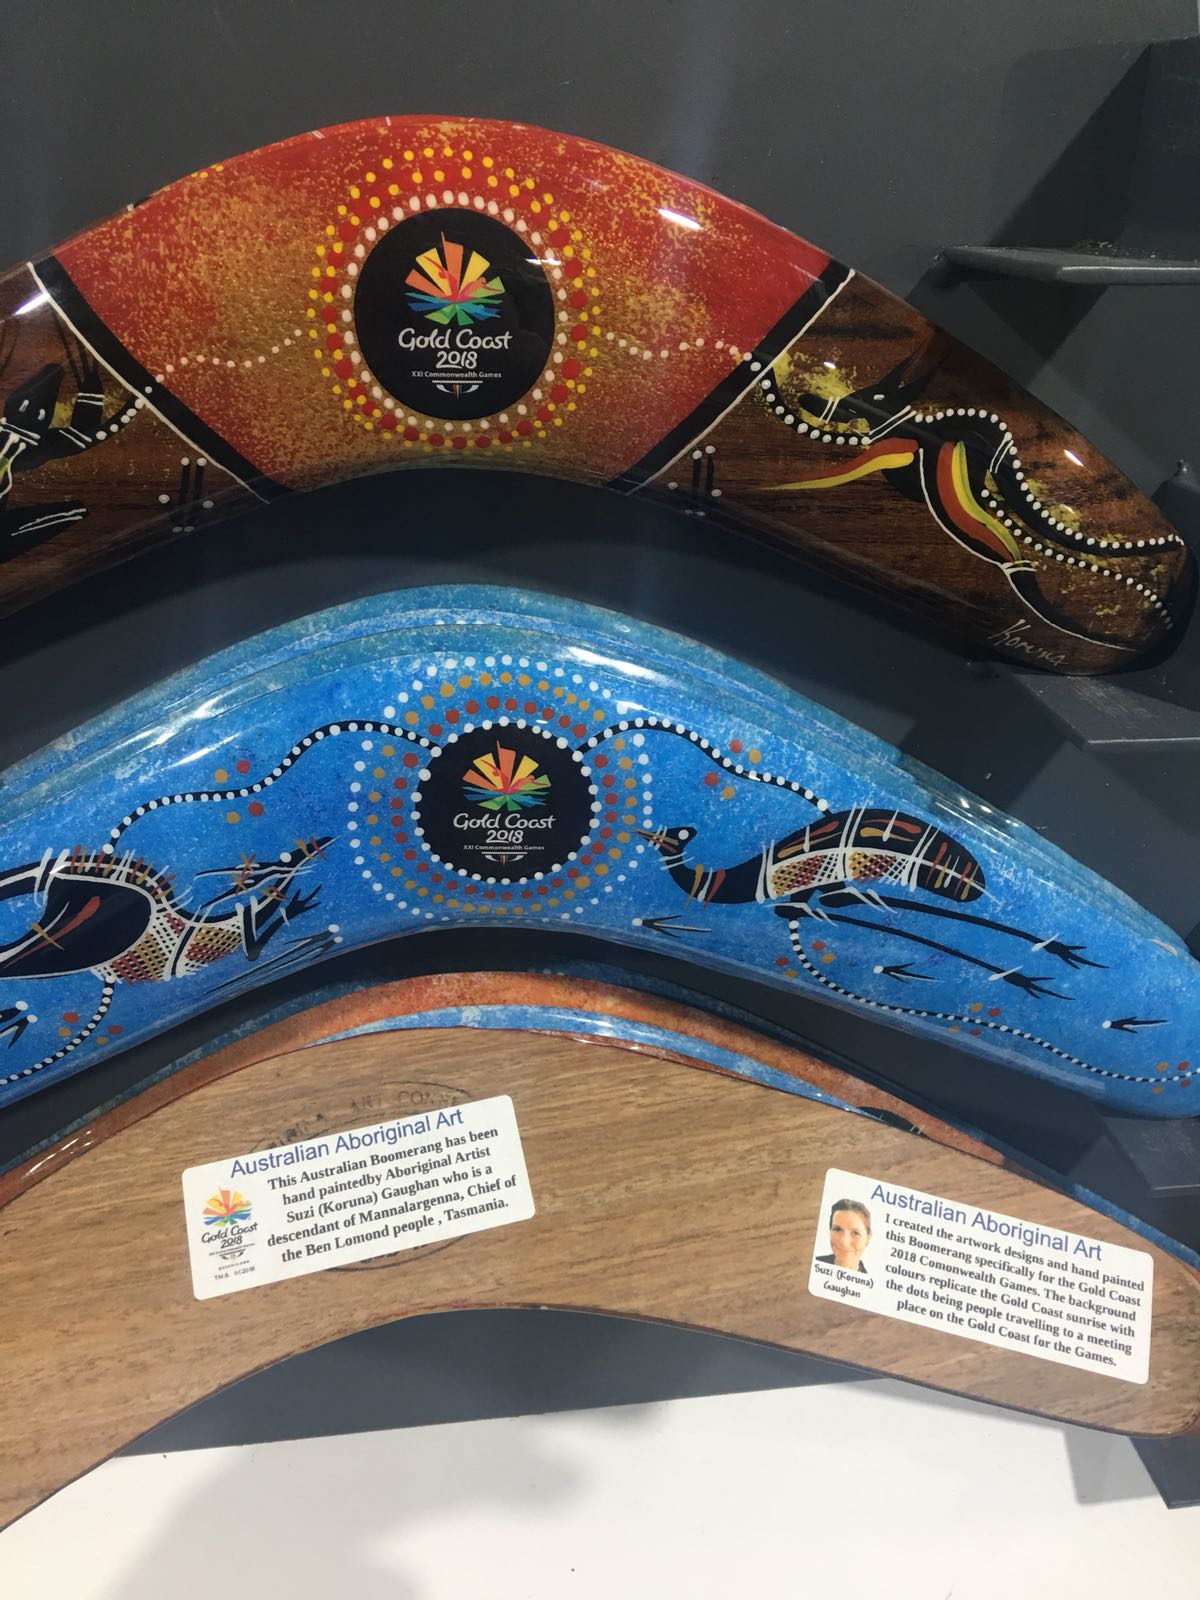  This Australian boomerang has been hand painted by Aboriginal artist Suzi (Koruna) Gaughan who is a descendant of Mannalargenna, Chief of the Ben Lomond people, Tasmania. 